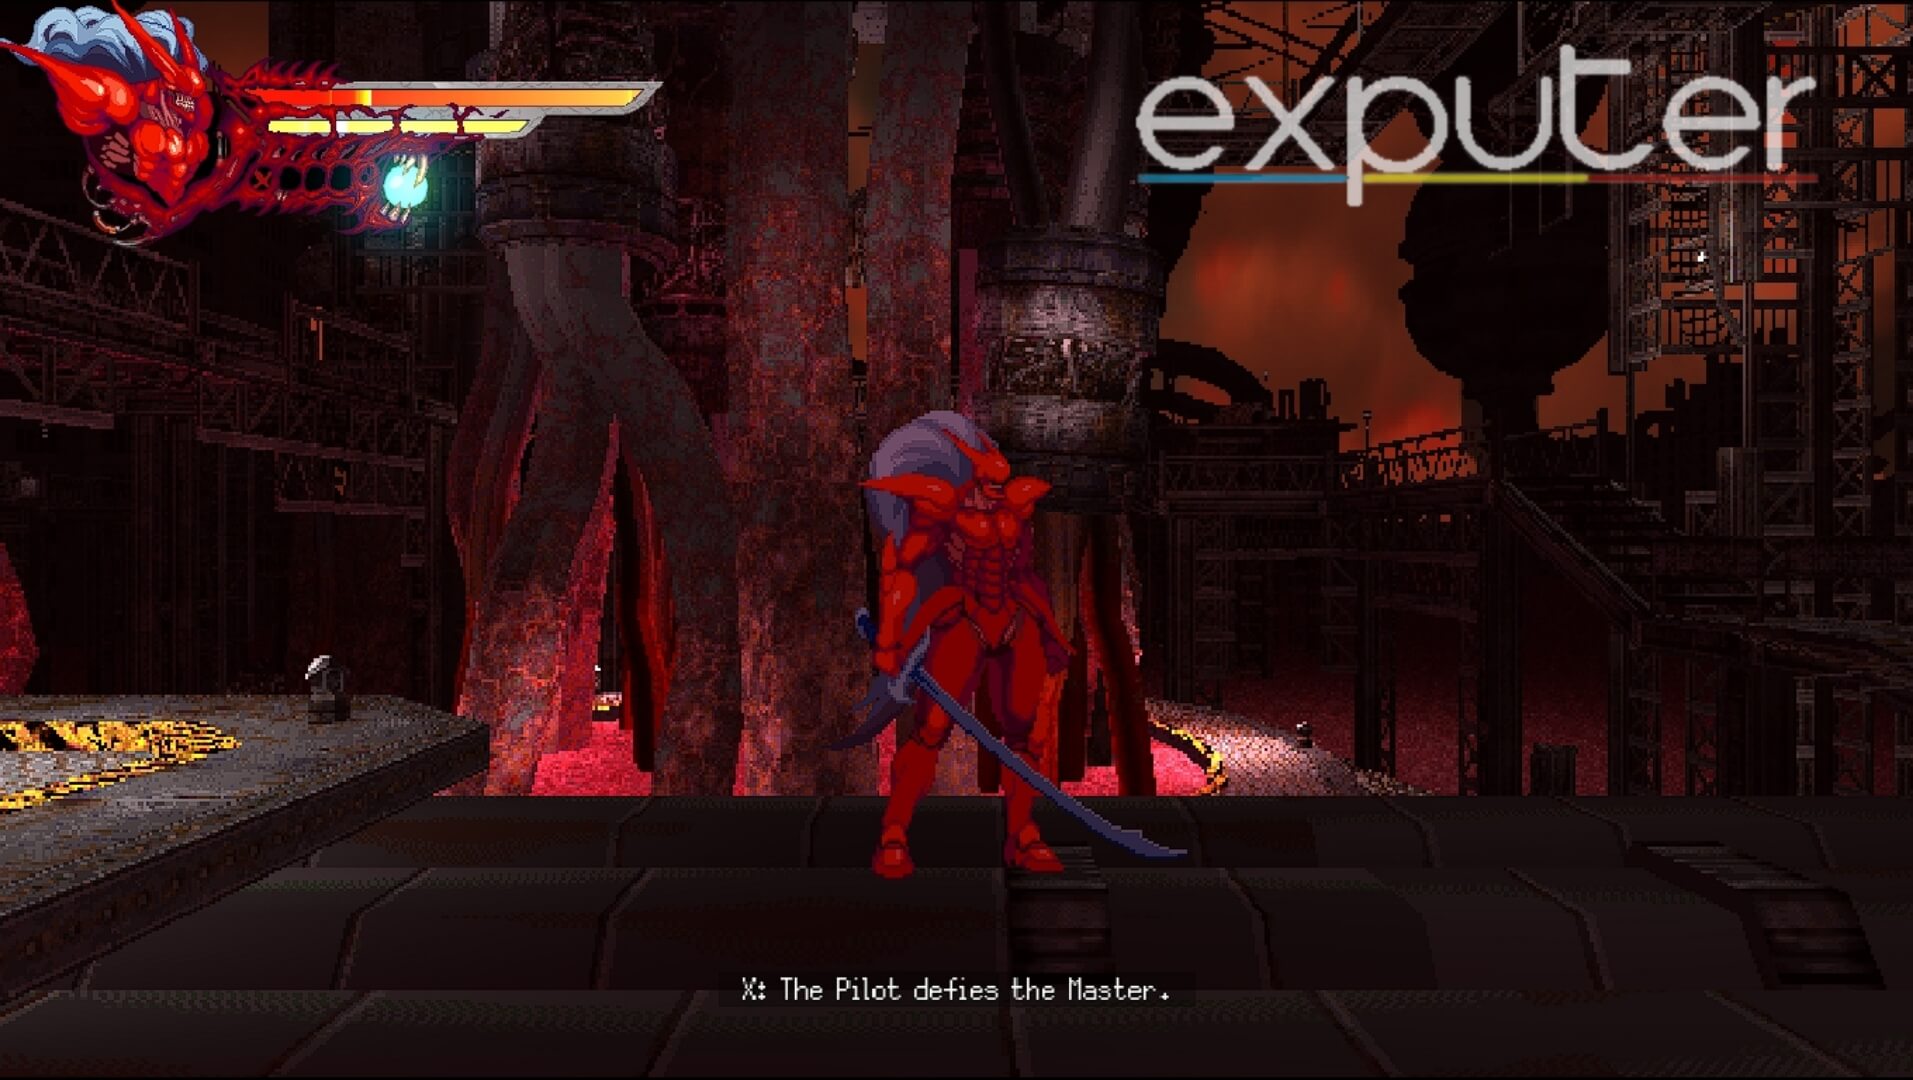 Shou, The Red Devil (Image credit: eXputer)